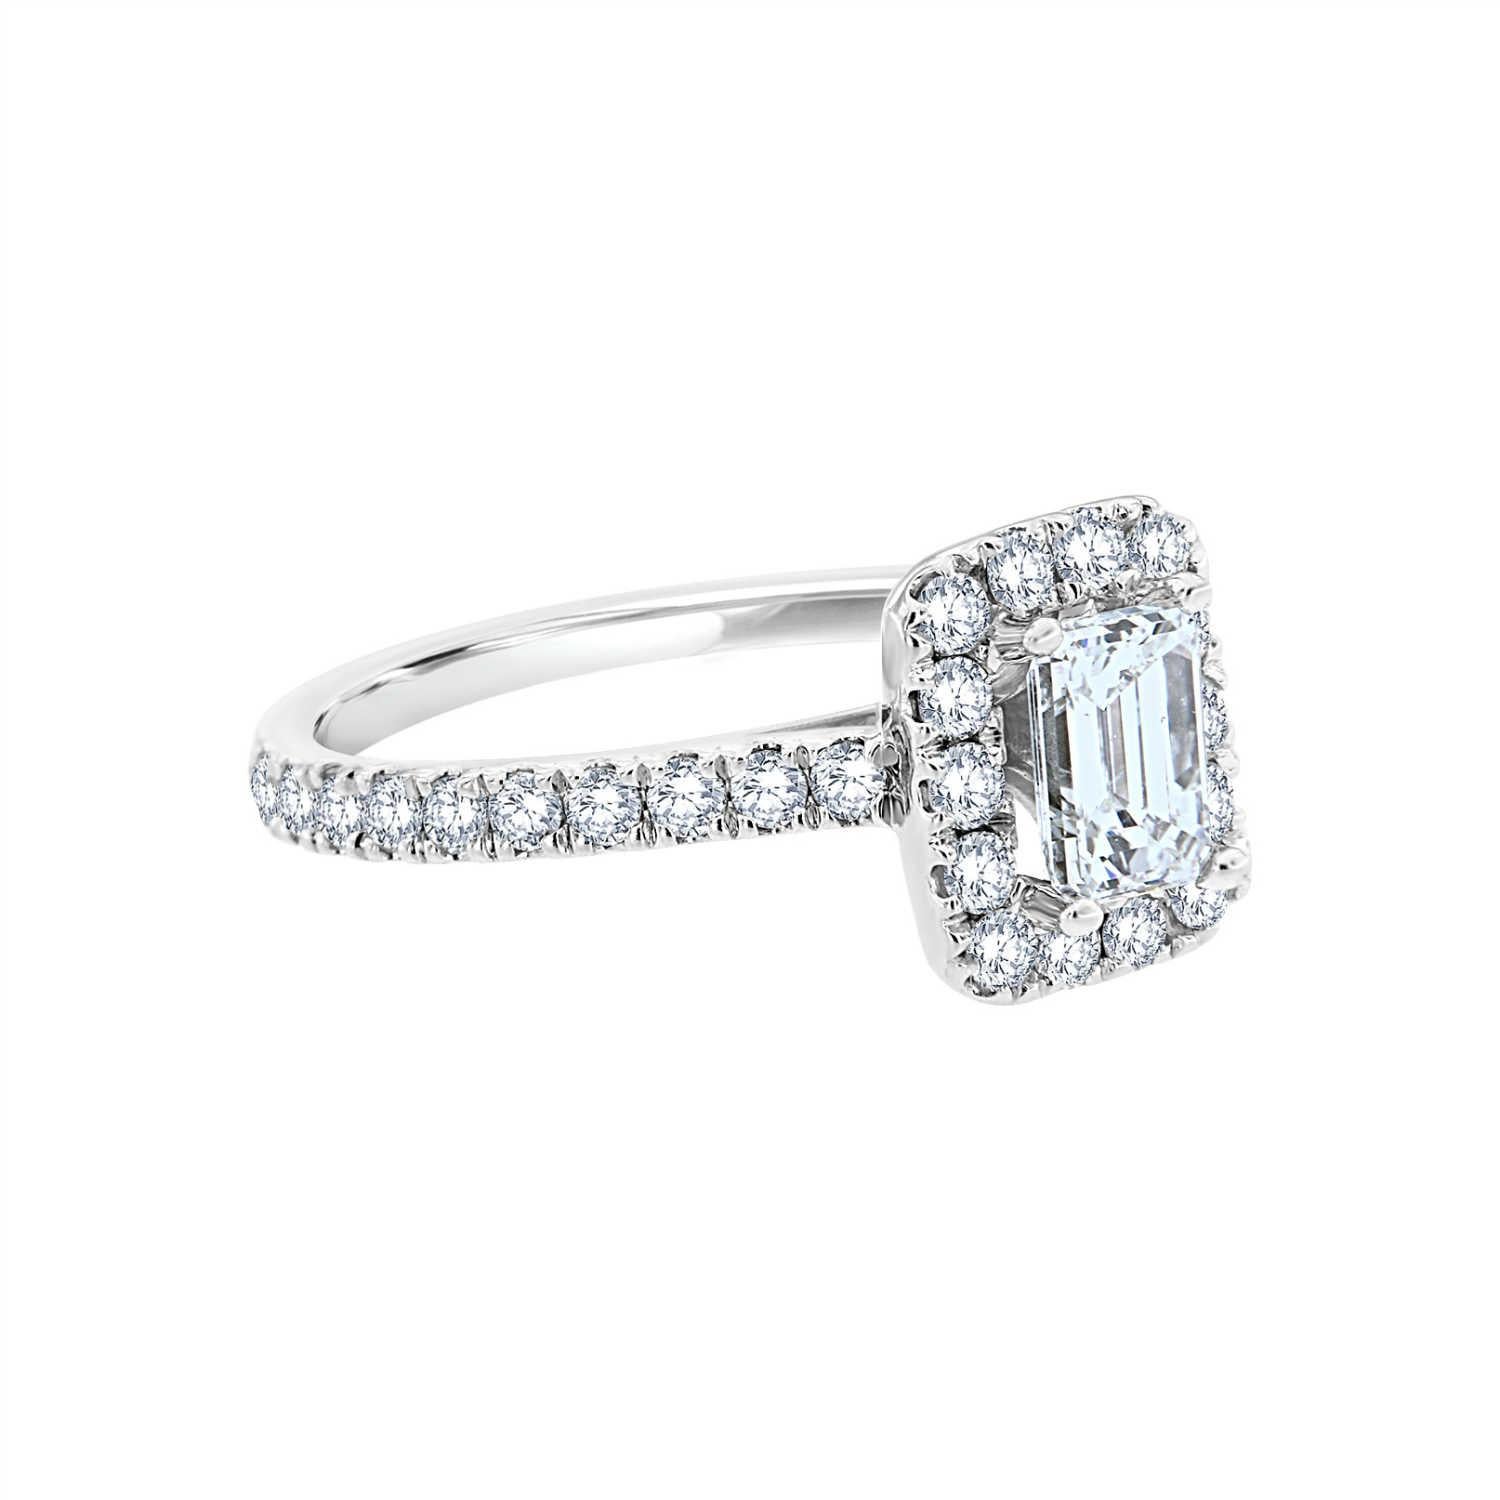 Emerald Cut 14K White Gold Halo Style Emerald Shape Diamond Ring, Center -0.96 Carat GIA